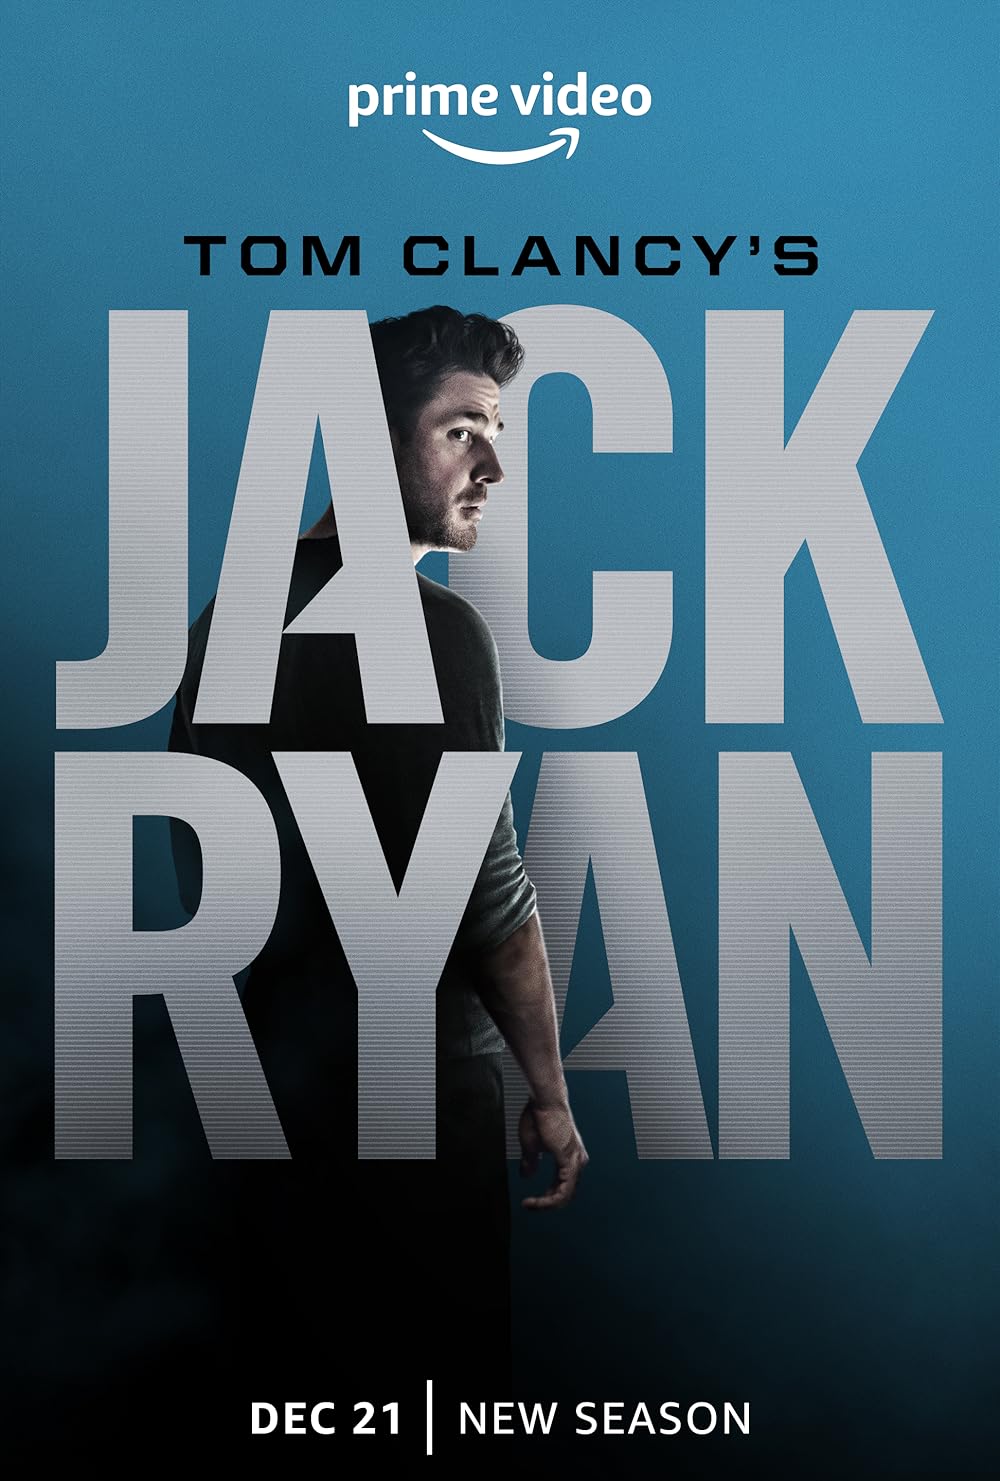 Tom Clancy's Jack Ryan (2018) S1 EP01&EP08 640Kbps 23.976Fps 48Khz 5.1Ch DD+ AMZN E-AC3 Turkish Audio TAC